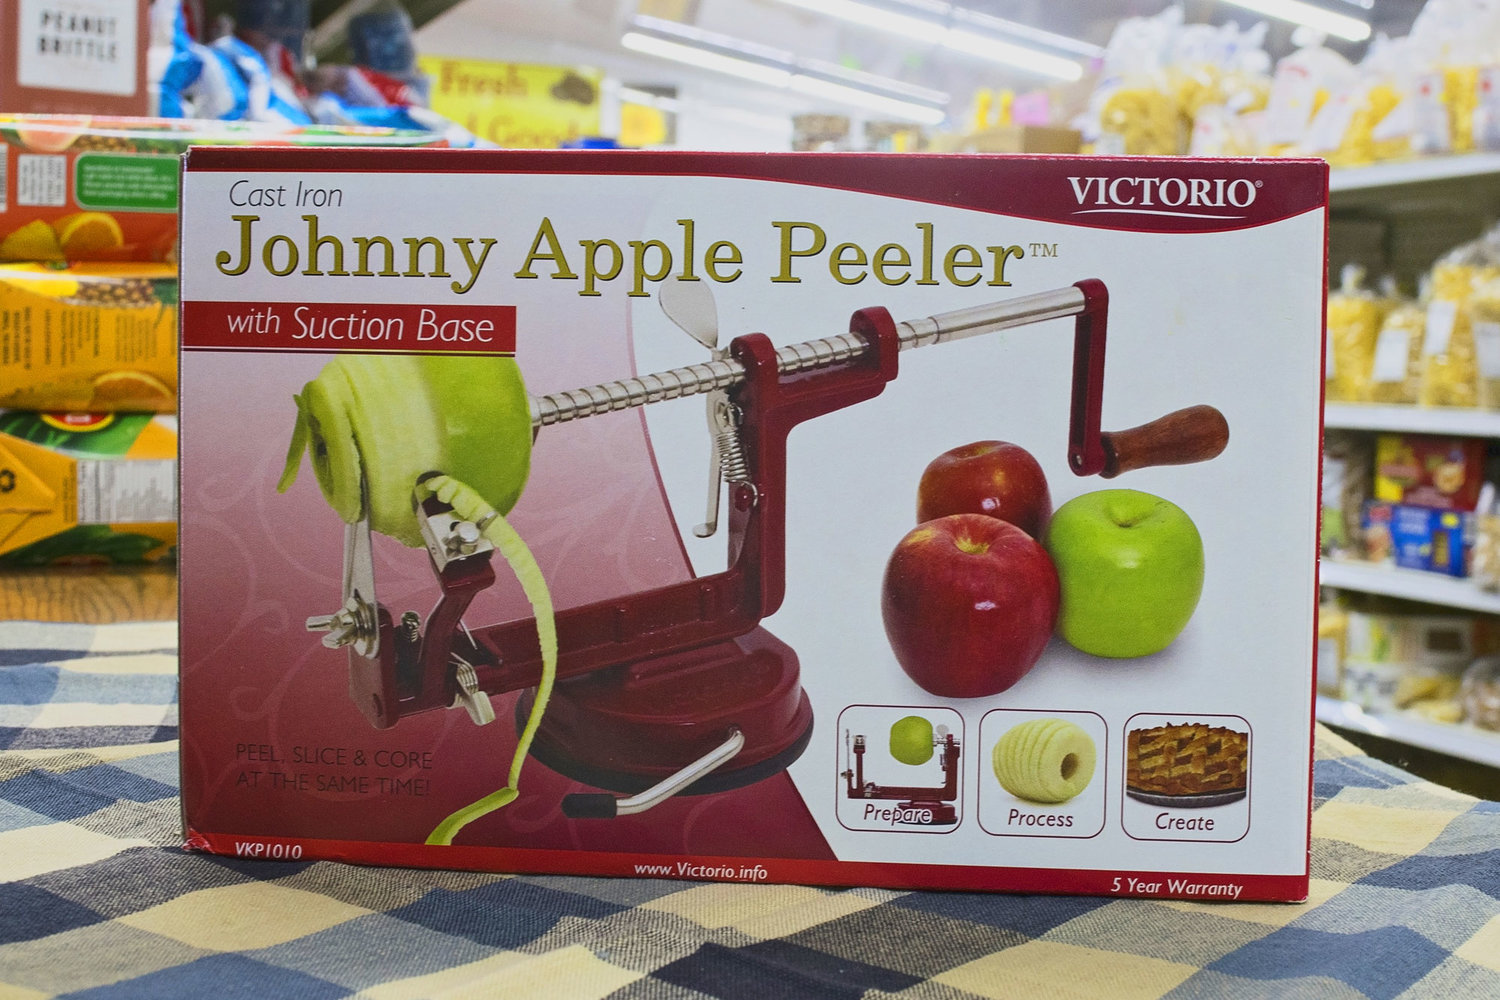 Victorio VKP1010 Johnny Apple Peeler Suction Base